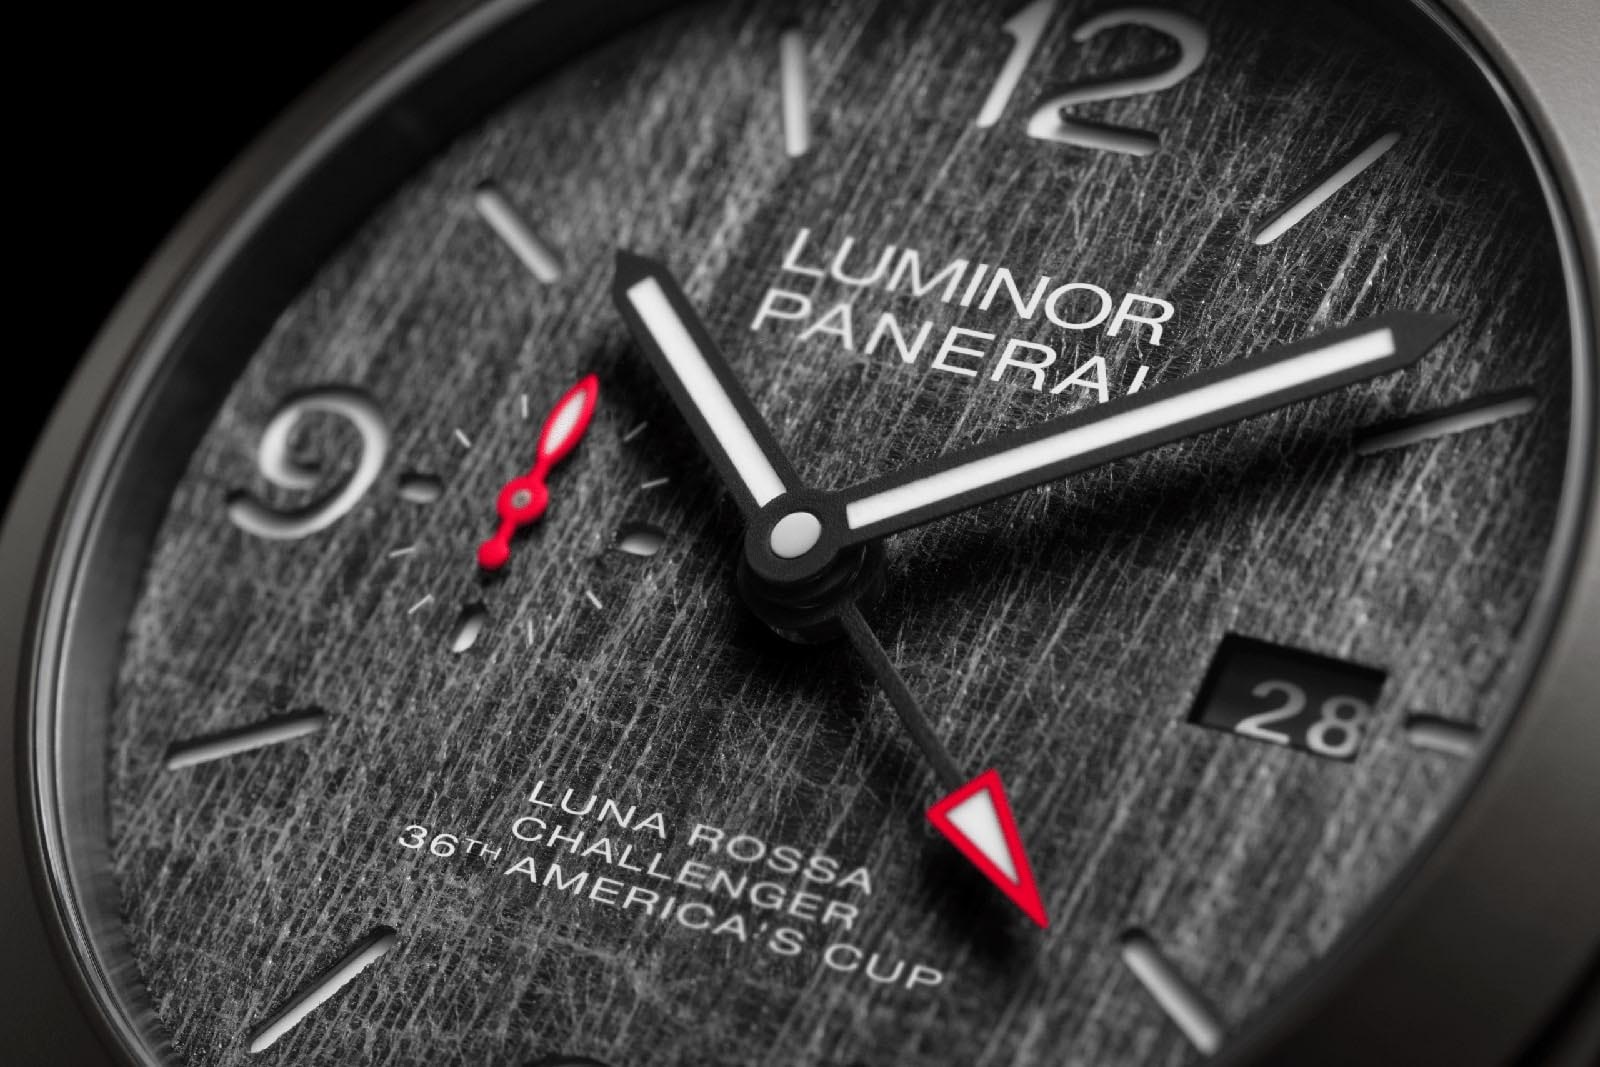 Panerai Introduces the Luminor Luna Rossa Collection | SJX Watches